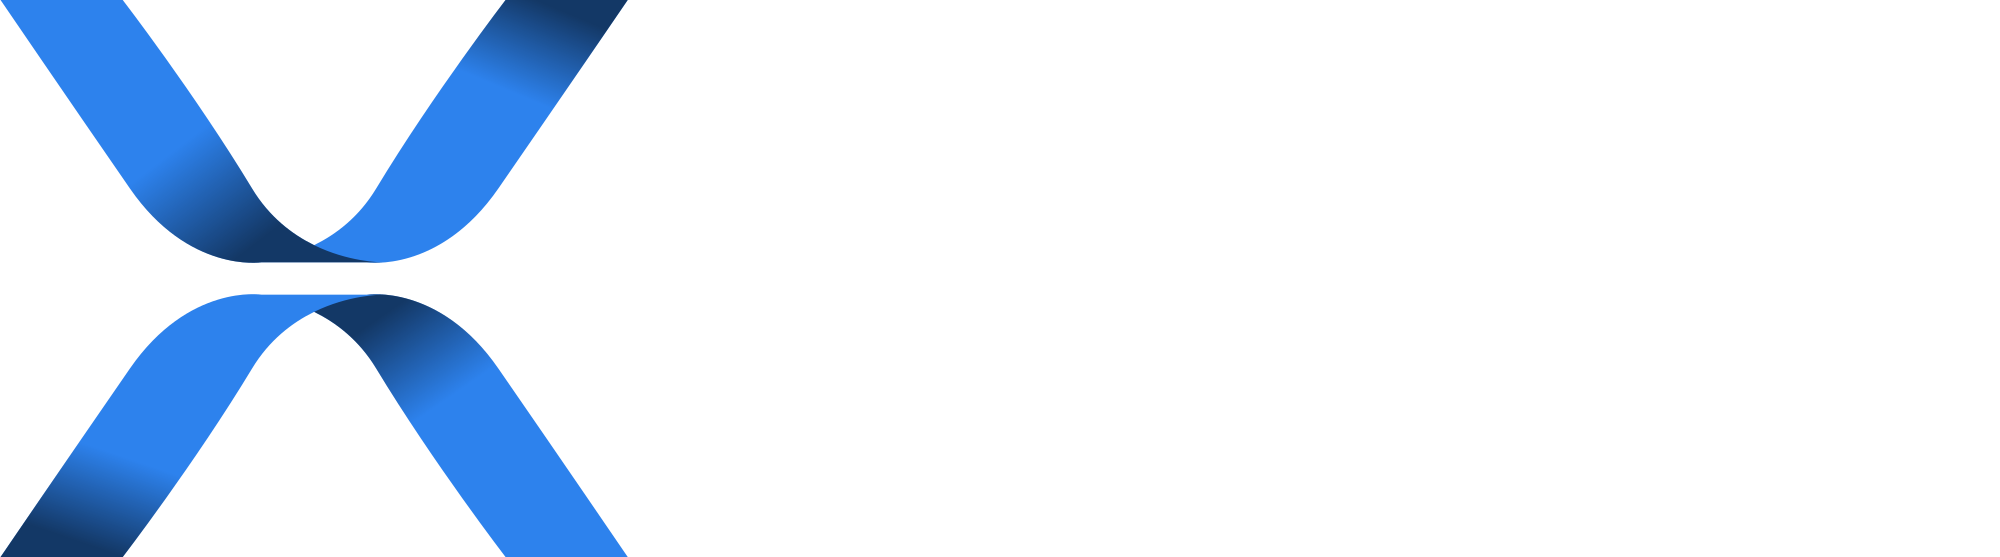 XCodeo Technologies